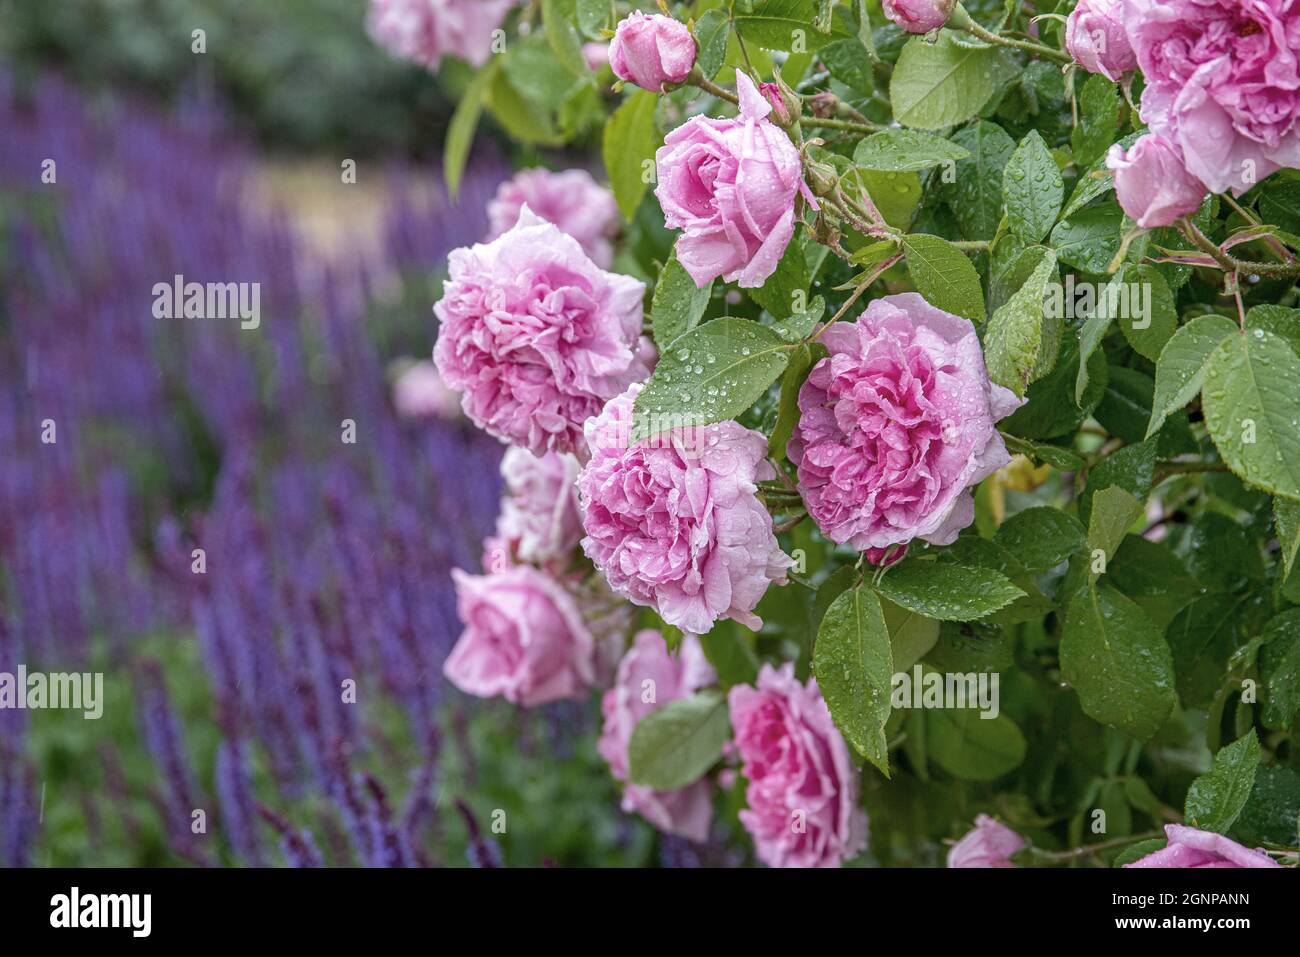 Rosa Comte de Chambord (Rosa Comte de Chambord, Rosa Comte de Chambord), flores de cultivar Comte de Chambord, Dinamarca Foto de stock